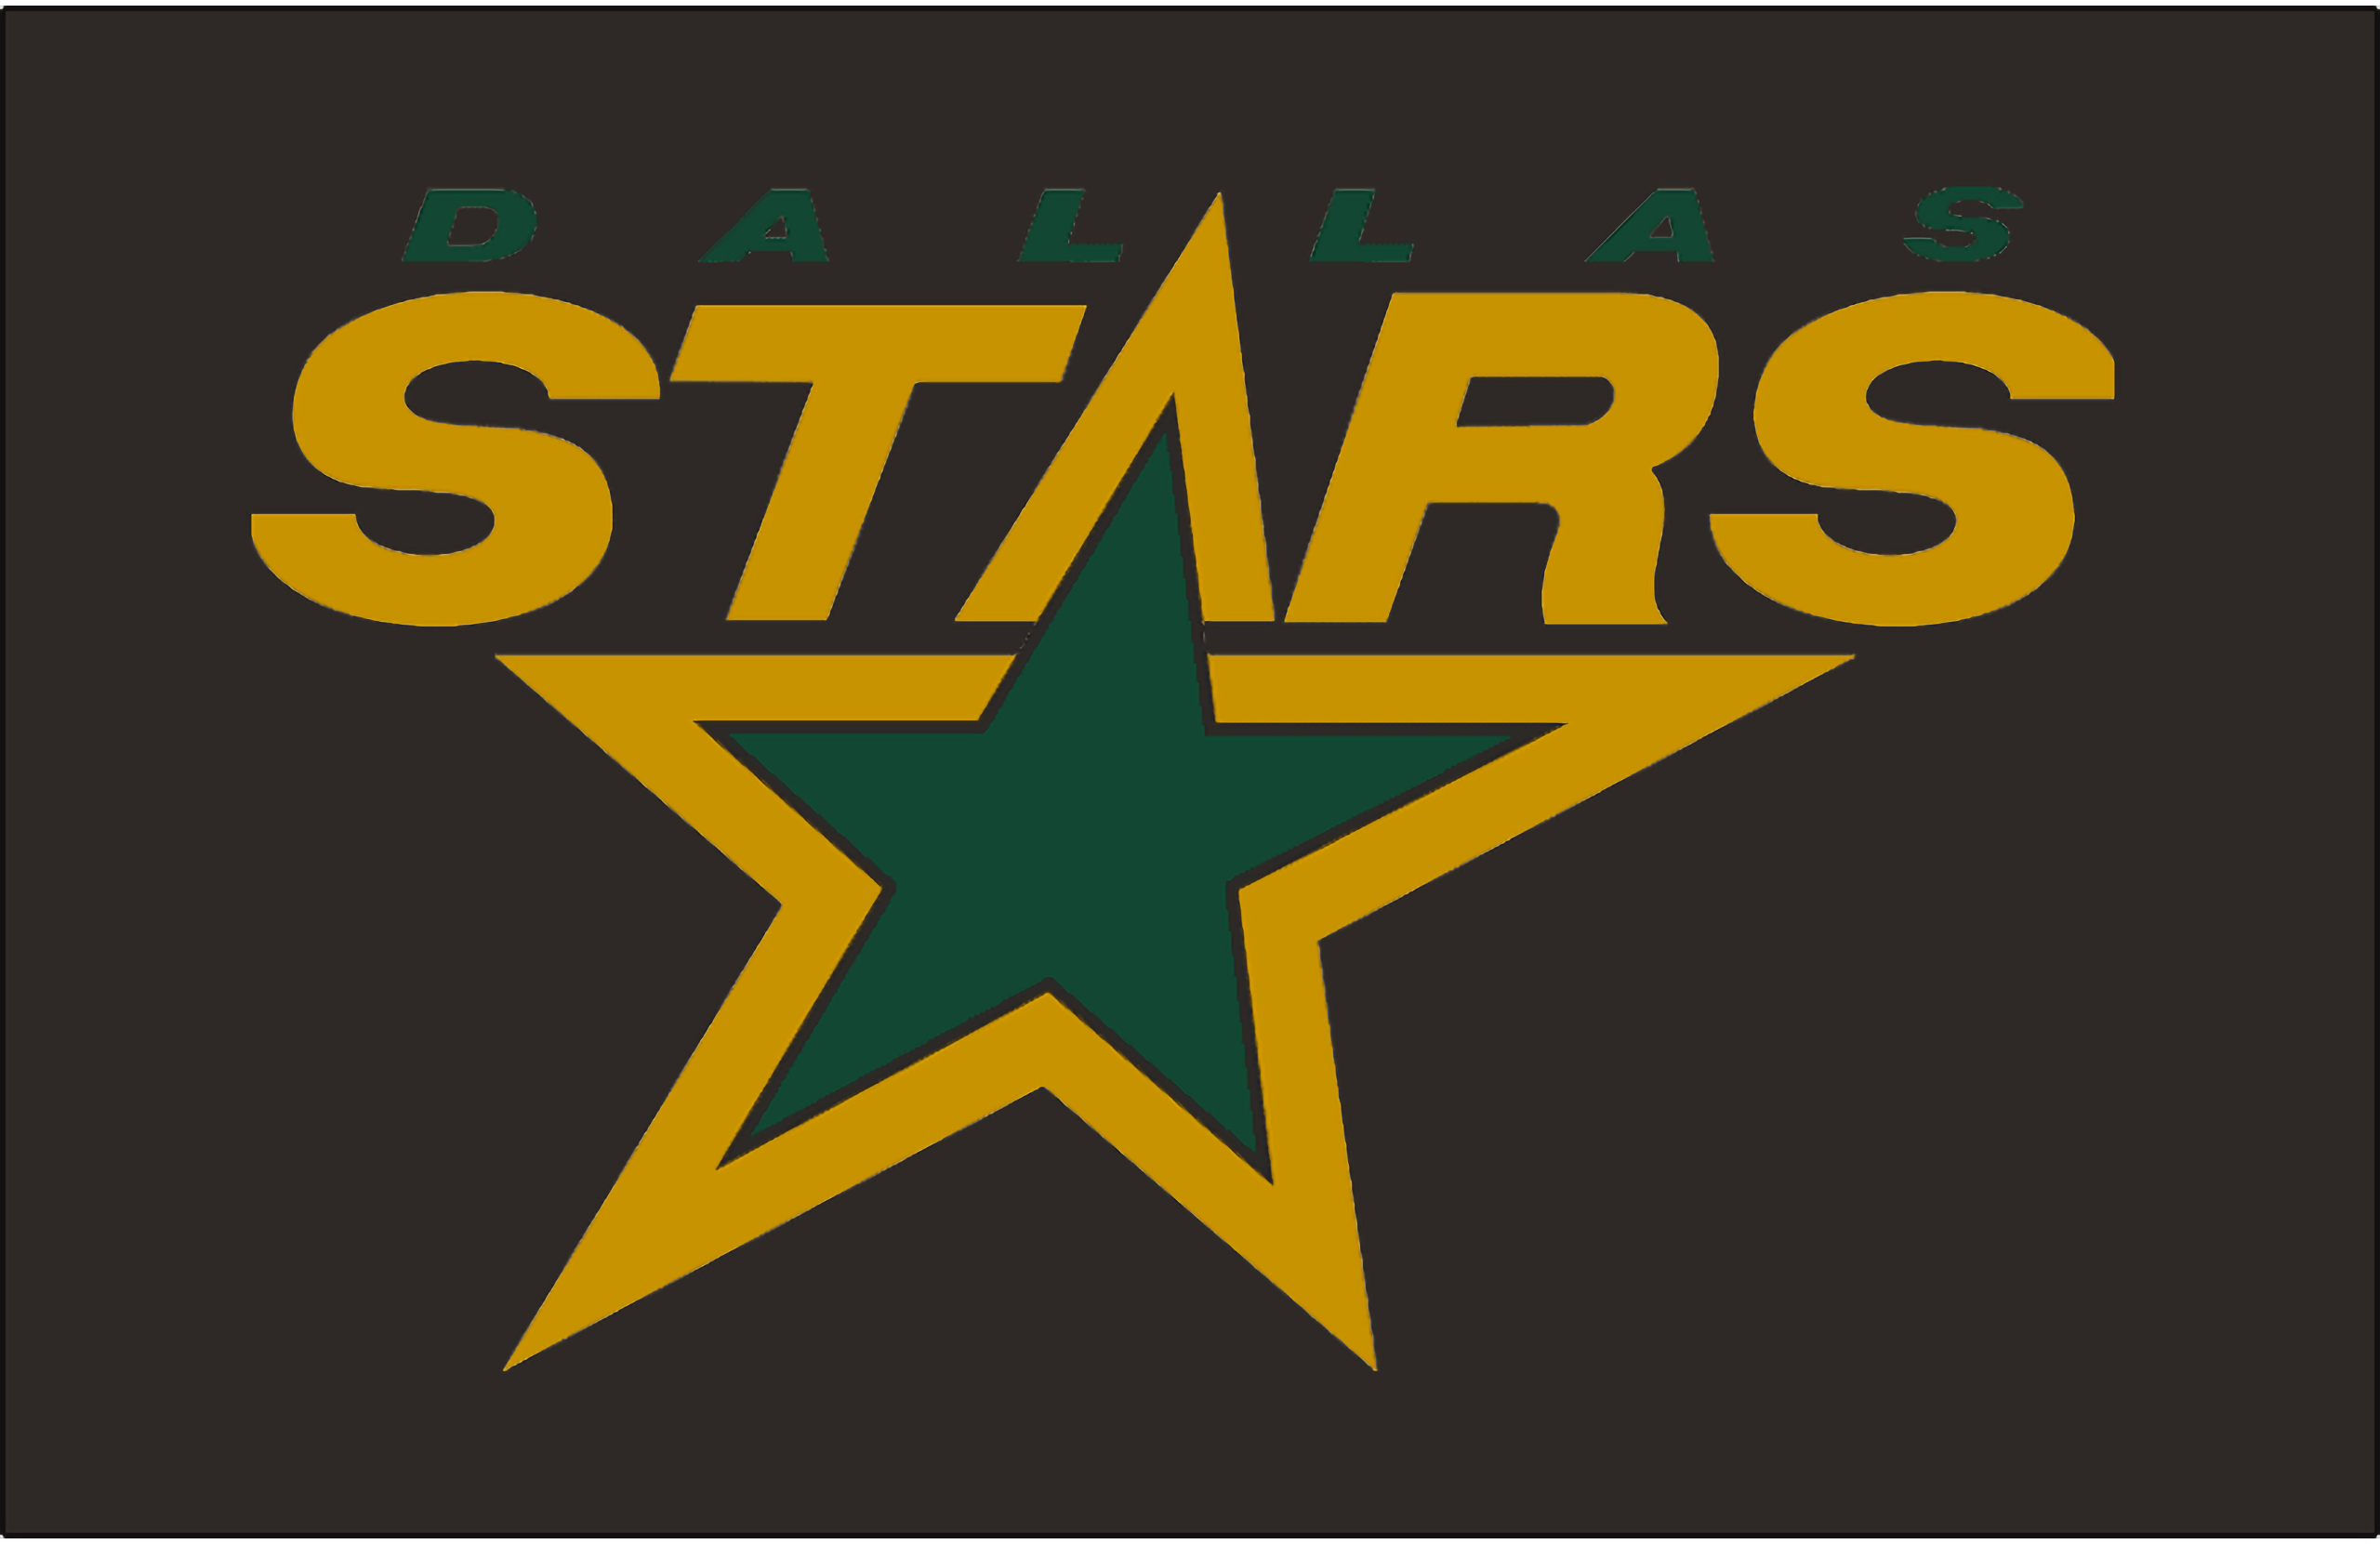 iphone wallpaper  Dallas stars, Star wallpaper, Dallas stars hockey